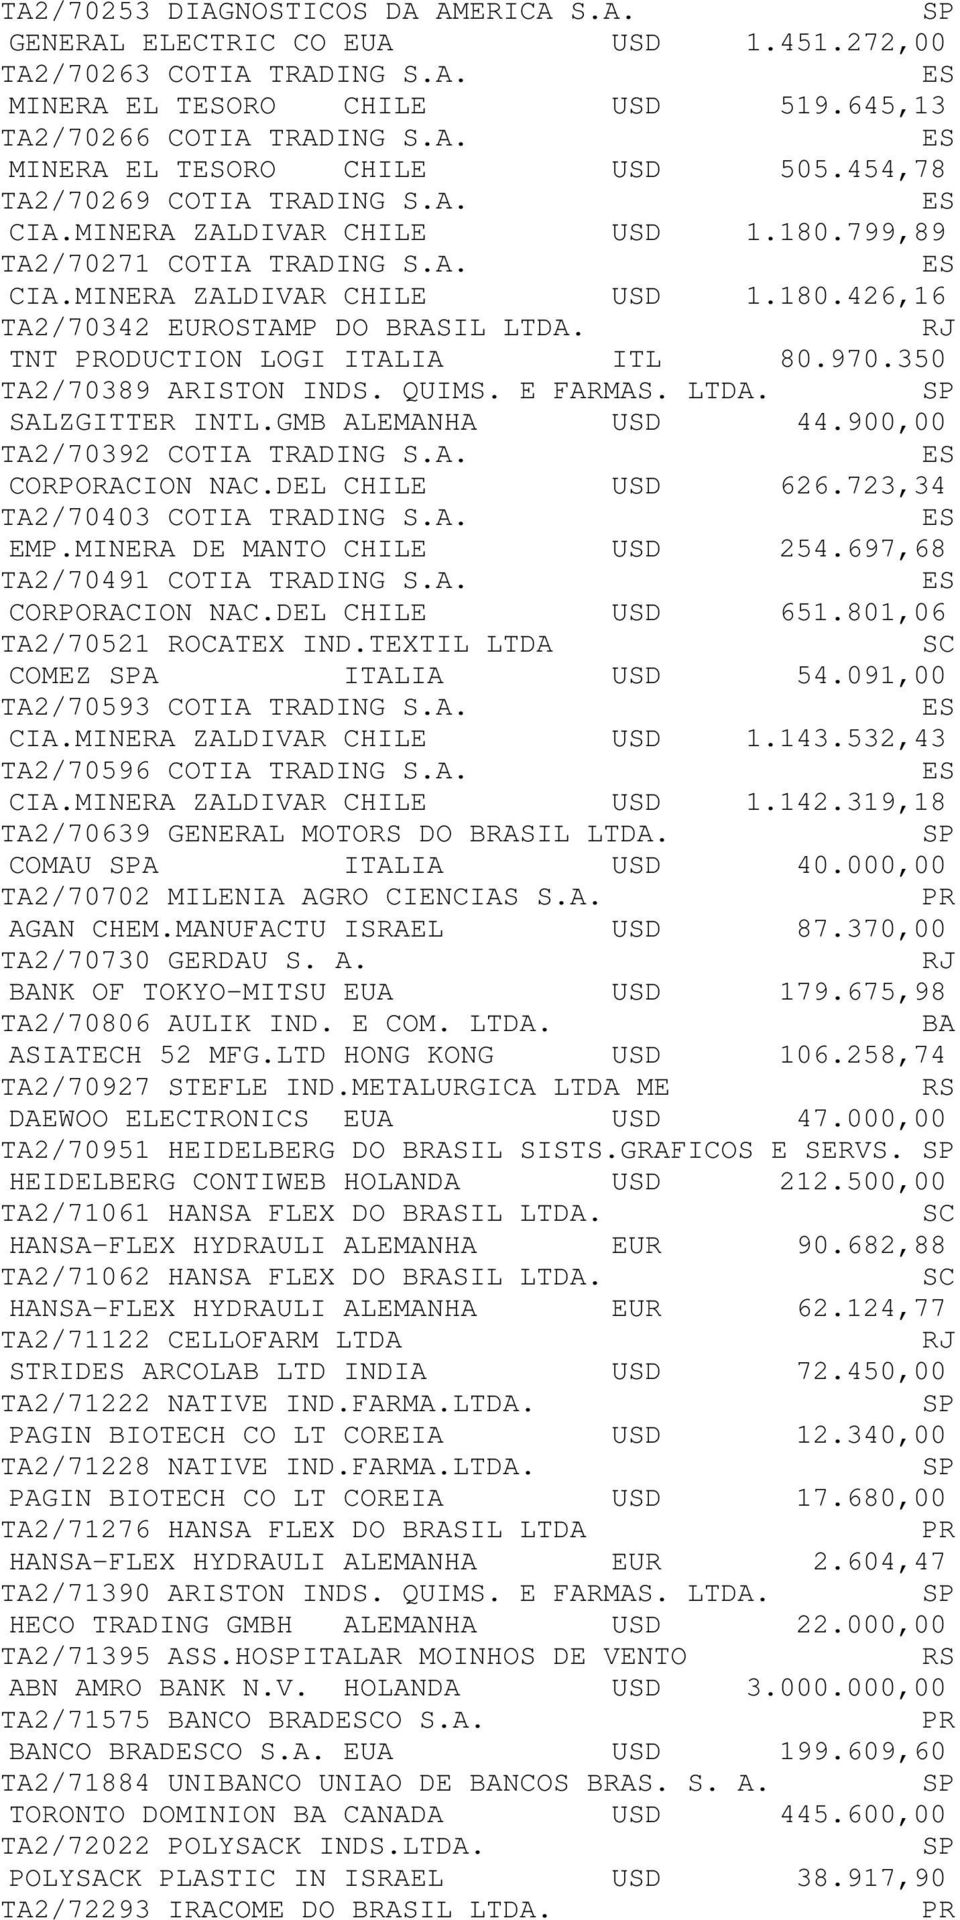 TNT ODUCTION LOGI ITALIA ITL 80.970.350 TA2/70389 ARISTON INDS. QUIMS. E FARMAS. LTDA. SALZGITTER INTL.GMB ALEMANHA USD 44.900,00 TA2/70392 COTIA TRADING S.A. CORPORACION NAC.DEL CHILE USD 626.